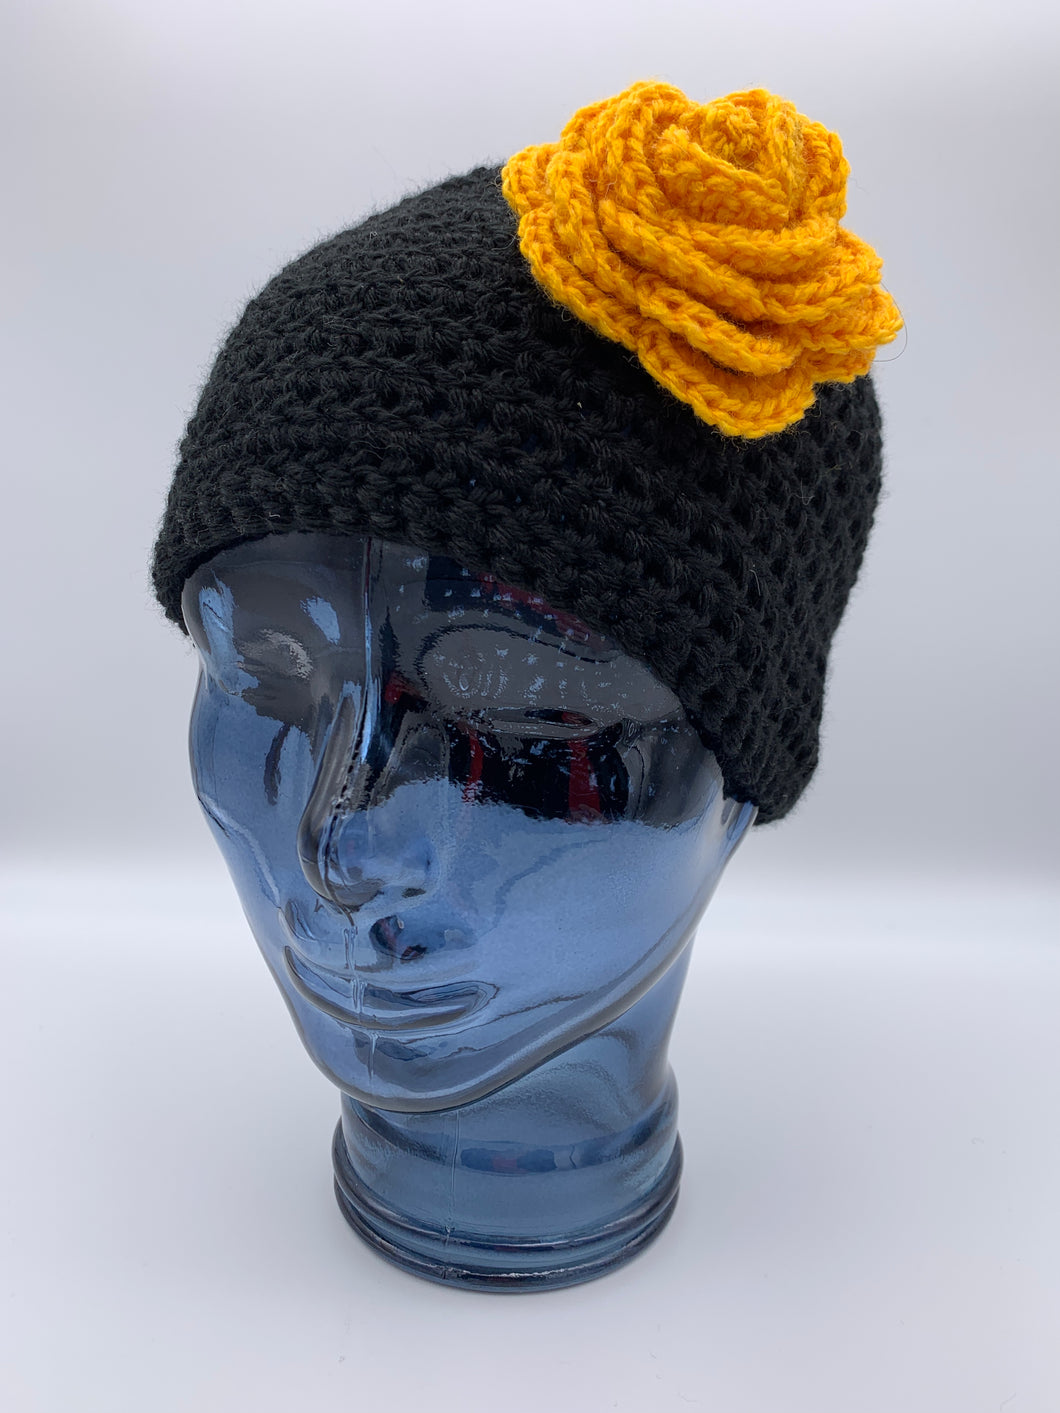 Crochet black beanie hat with yellow flower- Size medium adult